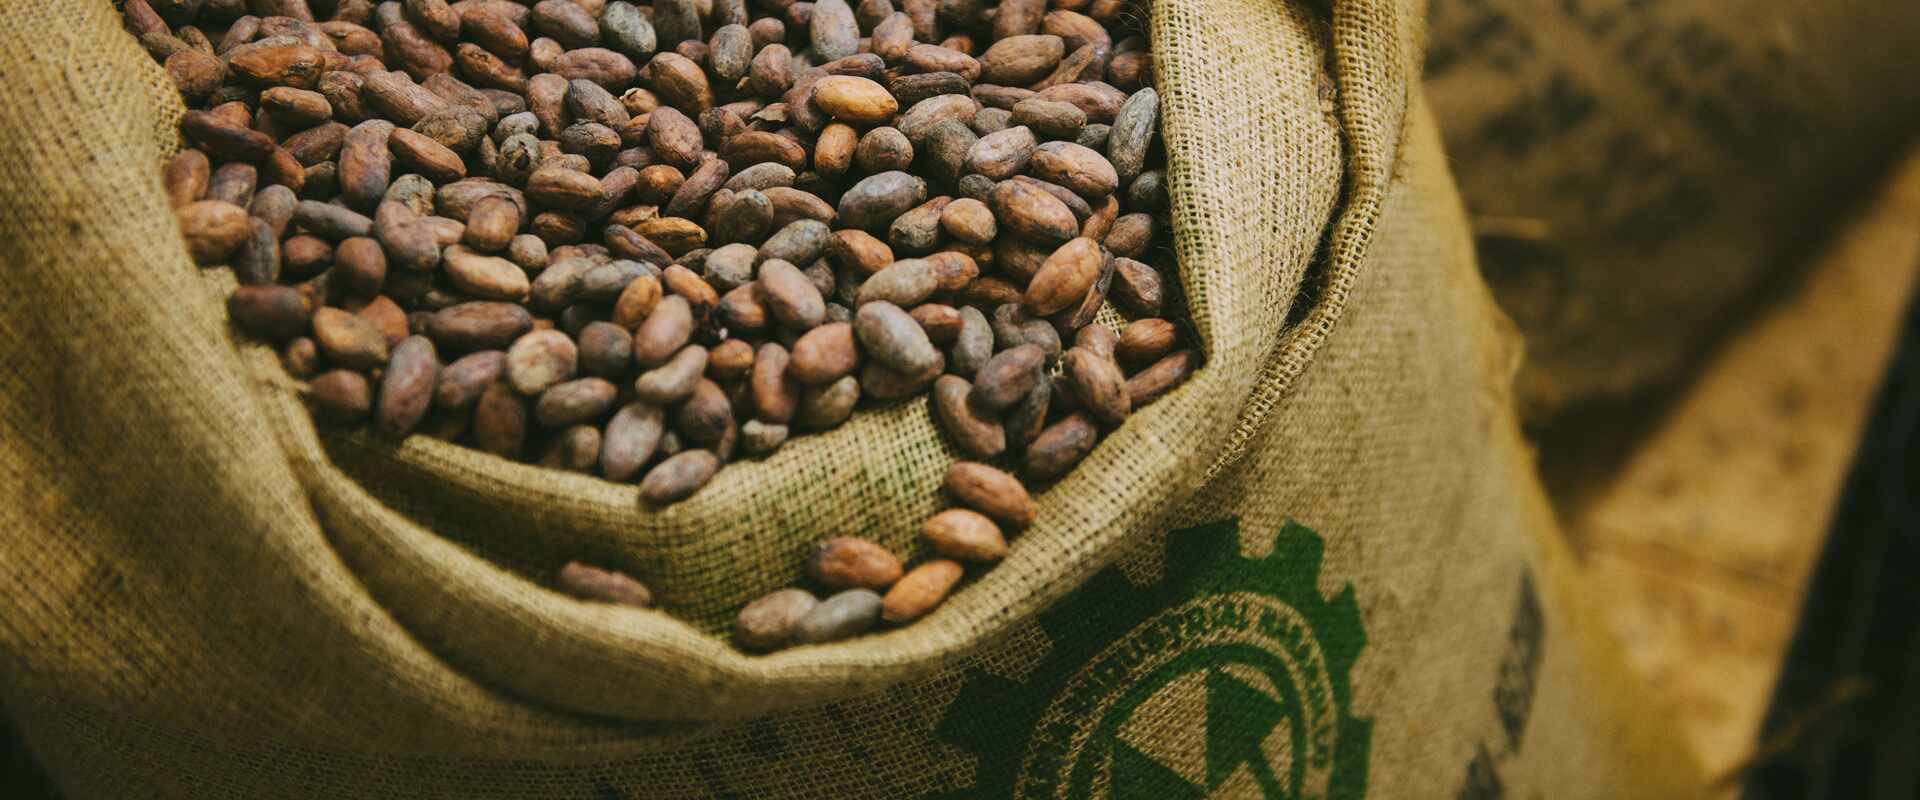 cacao beans in hessian bag, western australia